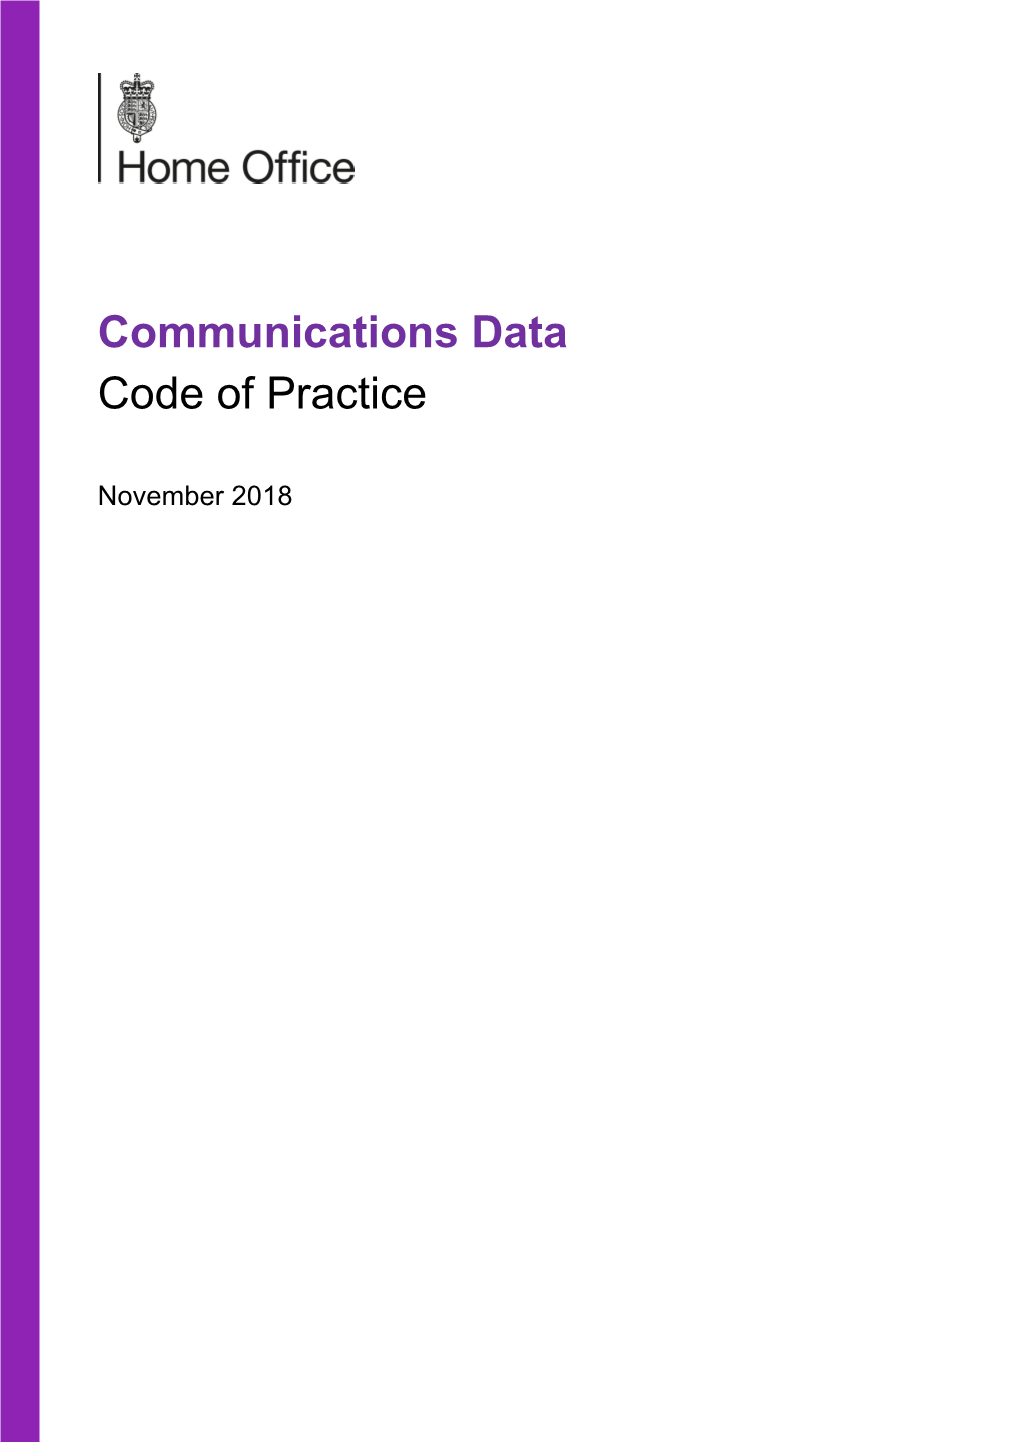 Communications Data Code of Practice